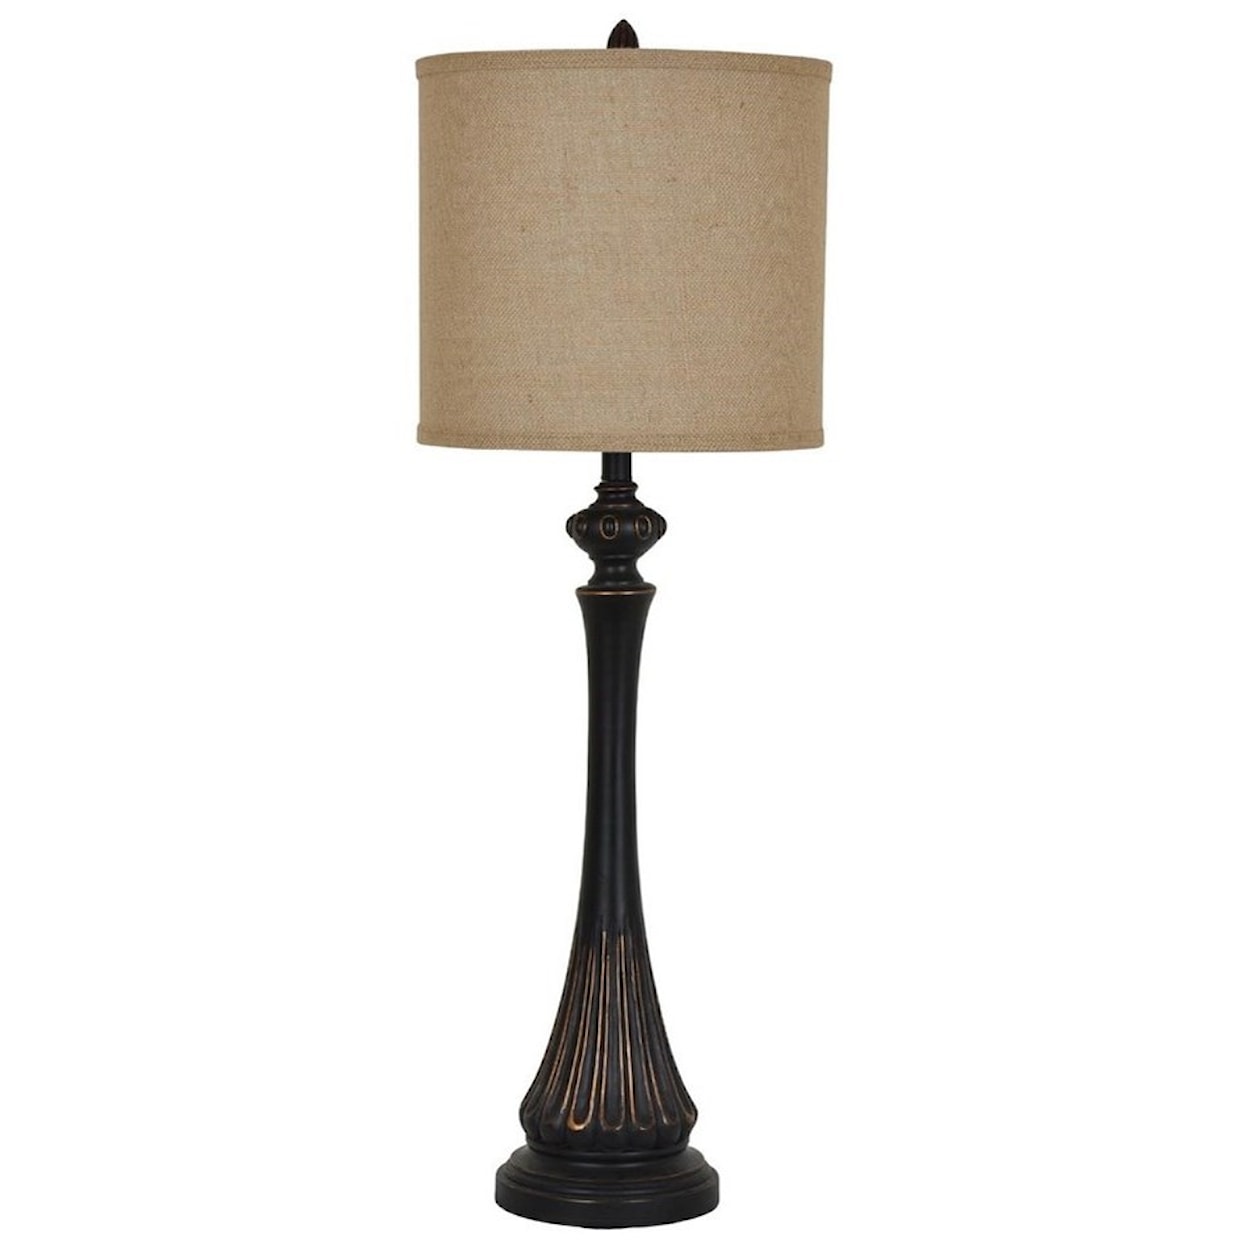 Crestview Collection Lighting Berwick Table Lamp